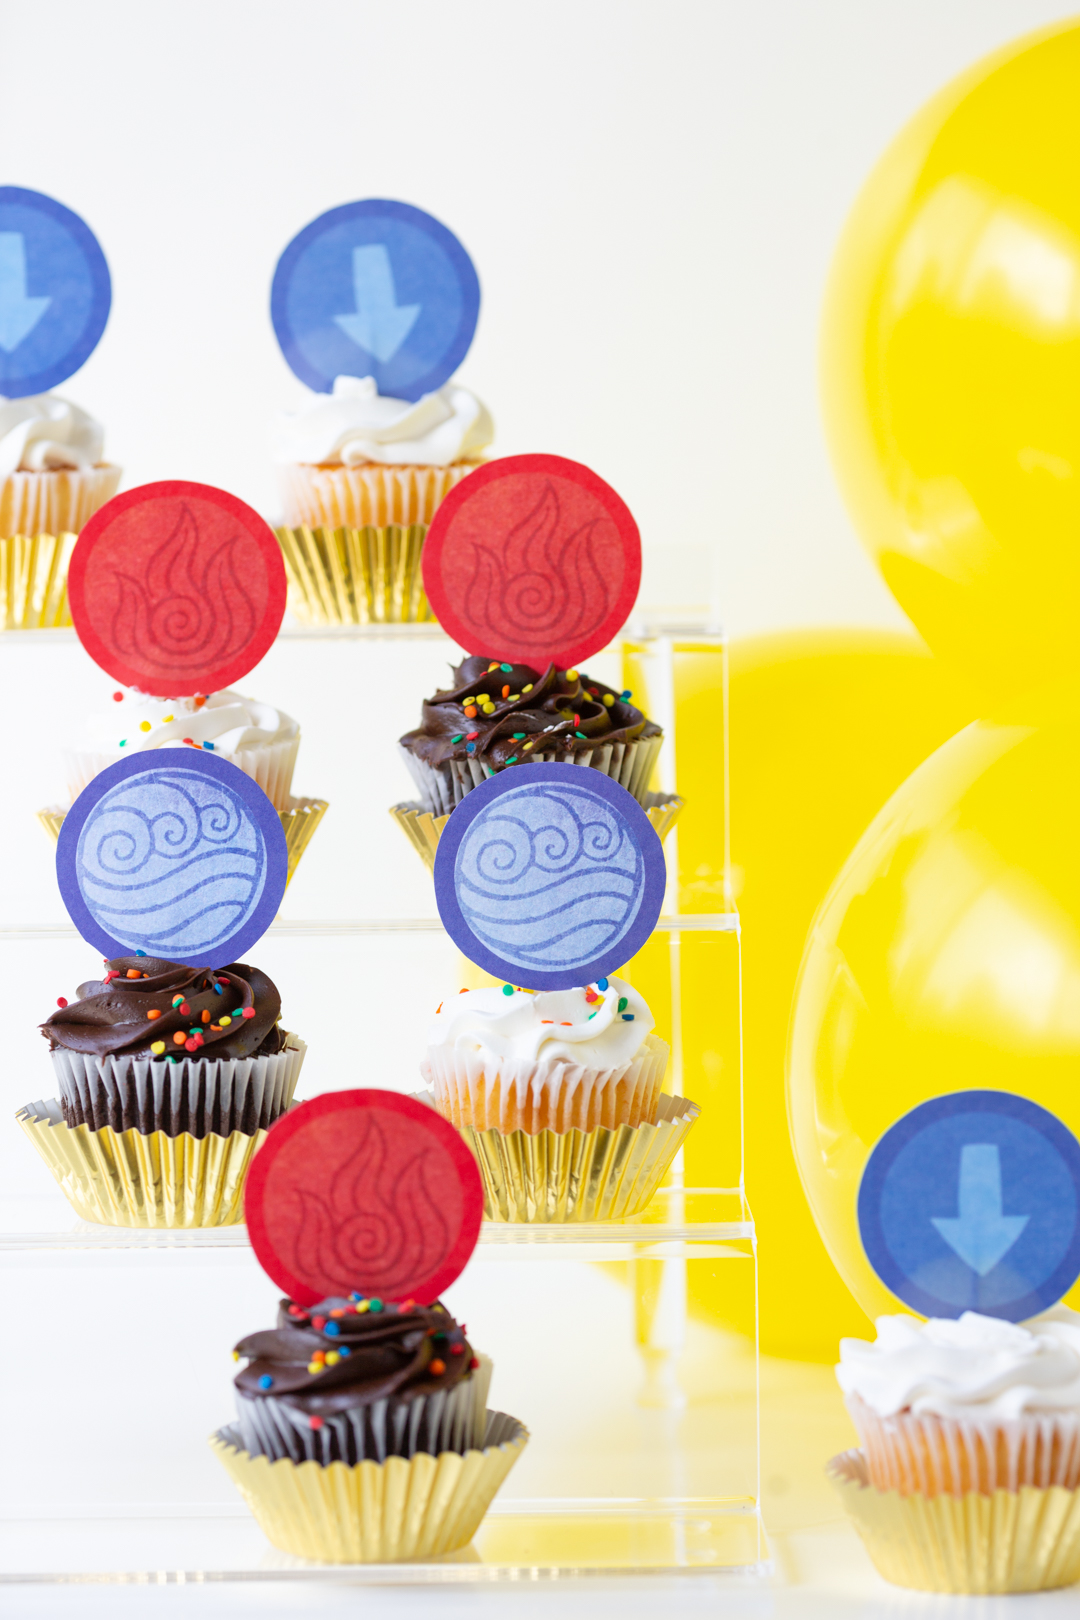 cupcakes elementares baseados no programa da Nickelodeon: Avatar: The Last Airbender.